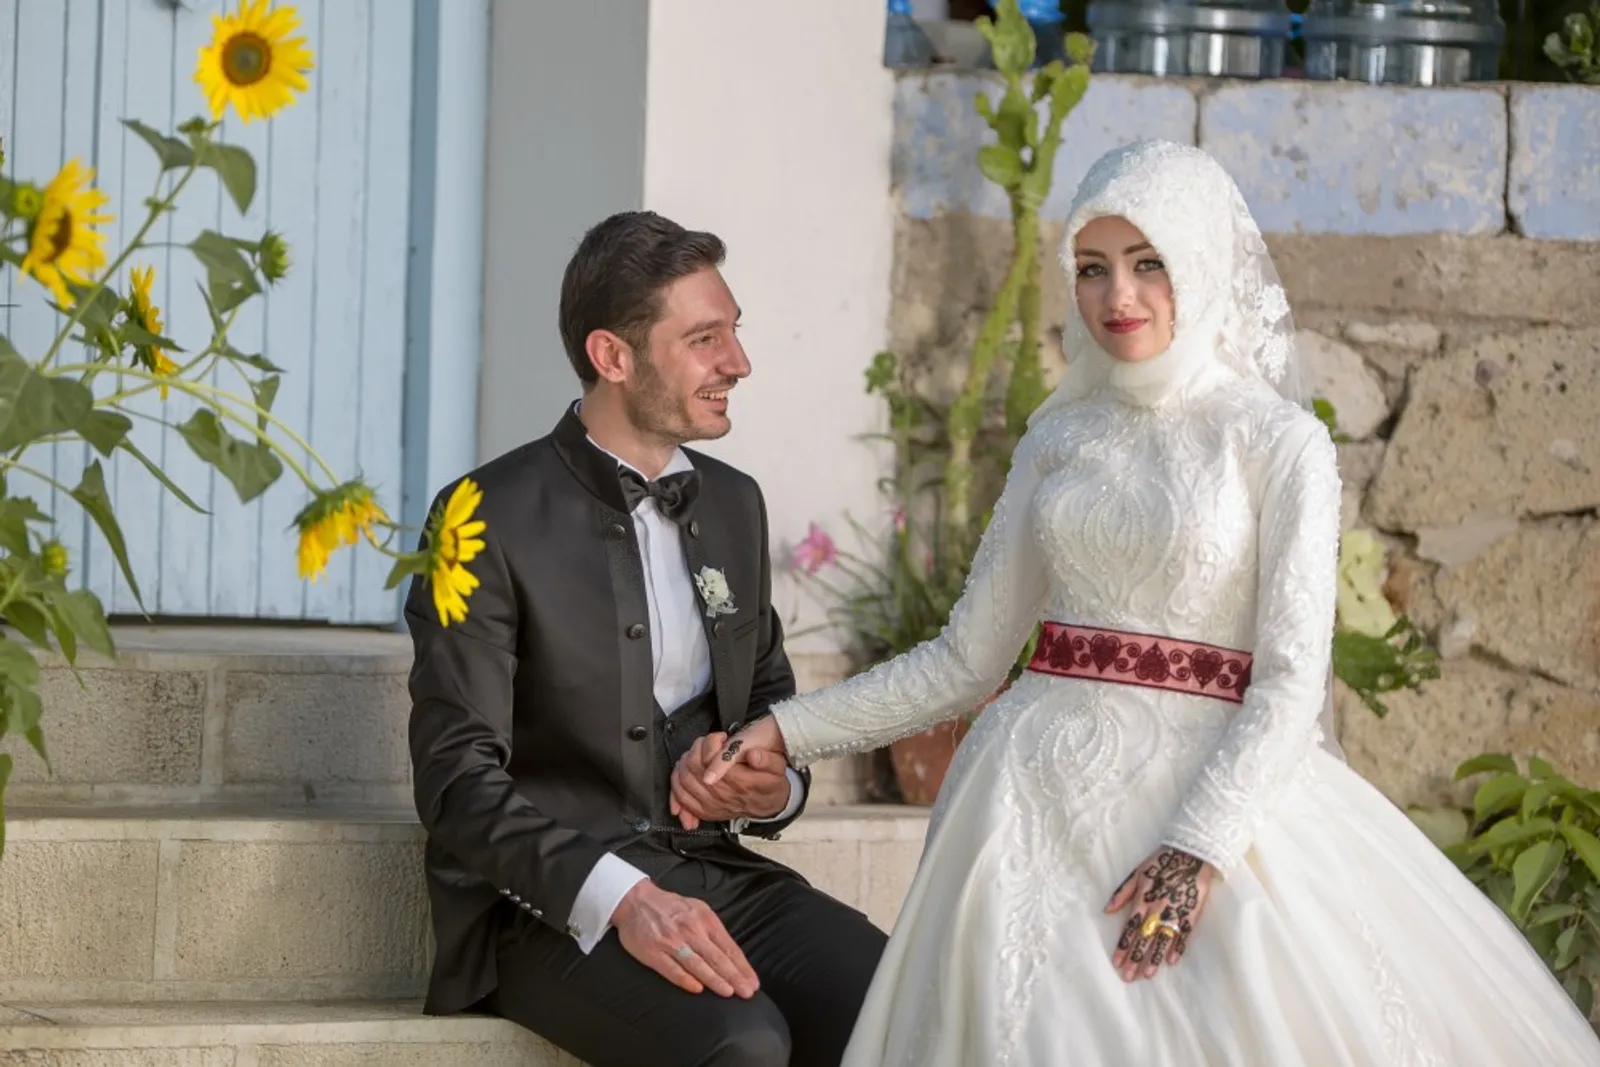 Hukum Suami Menghina Istri dalam Agama Islam